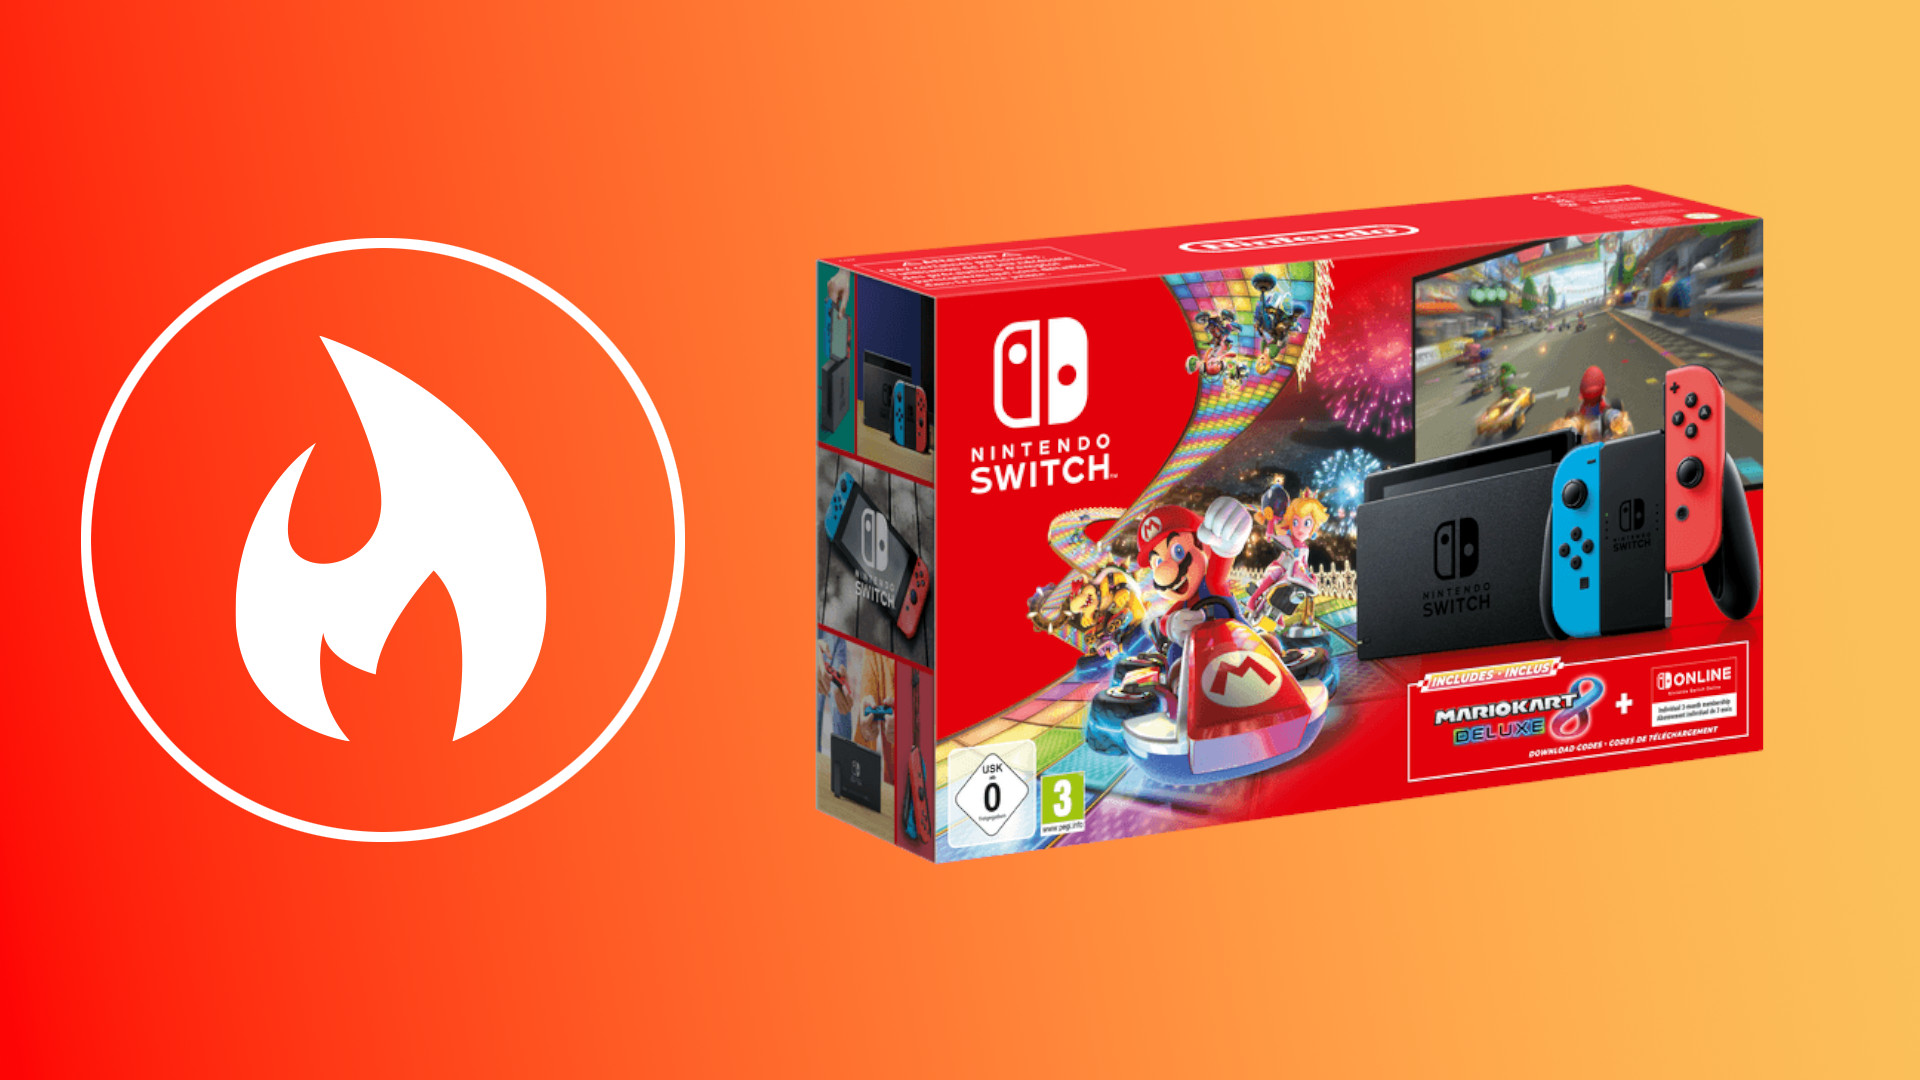 Nintendo Switch Mario bundle on orange background with Fire symbol